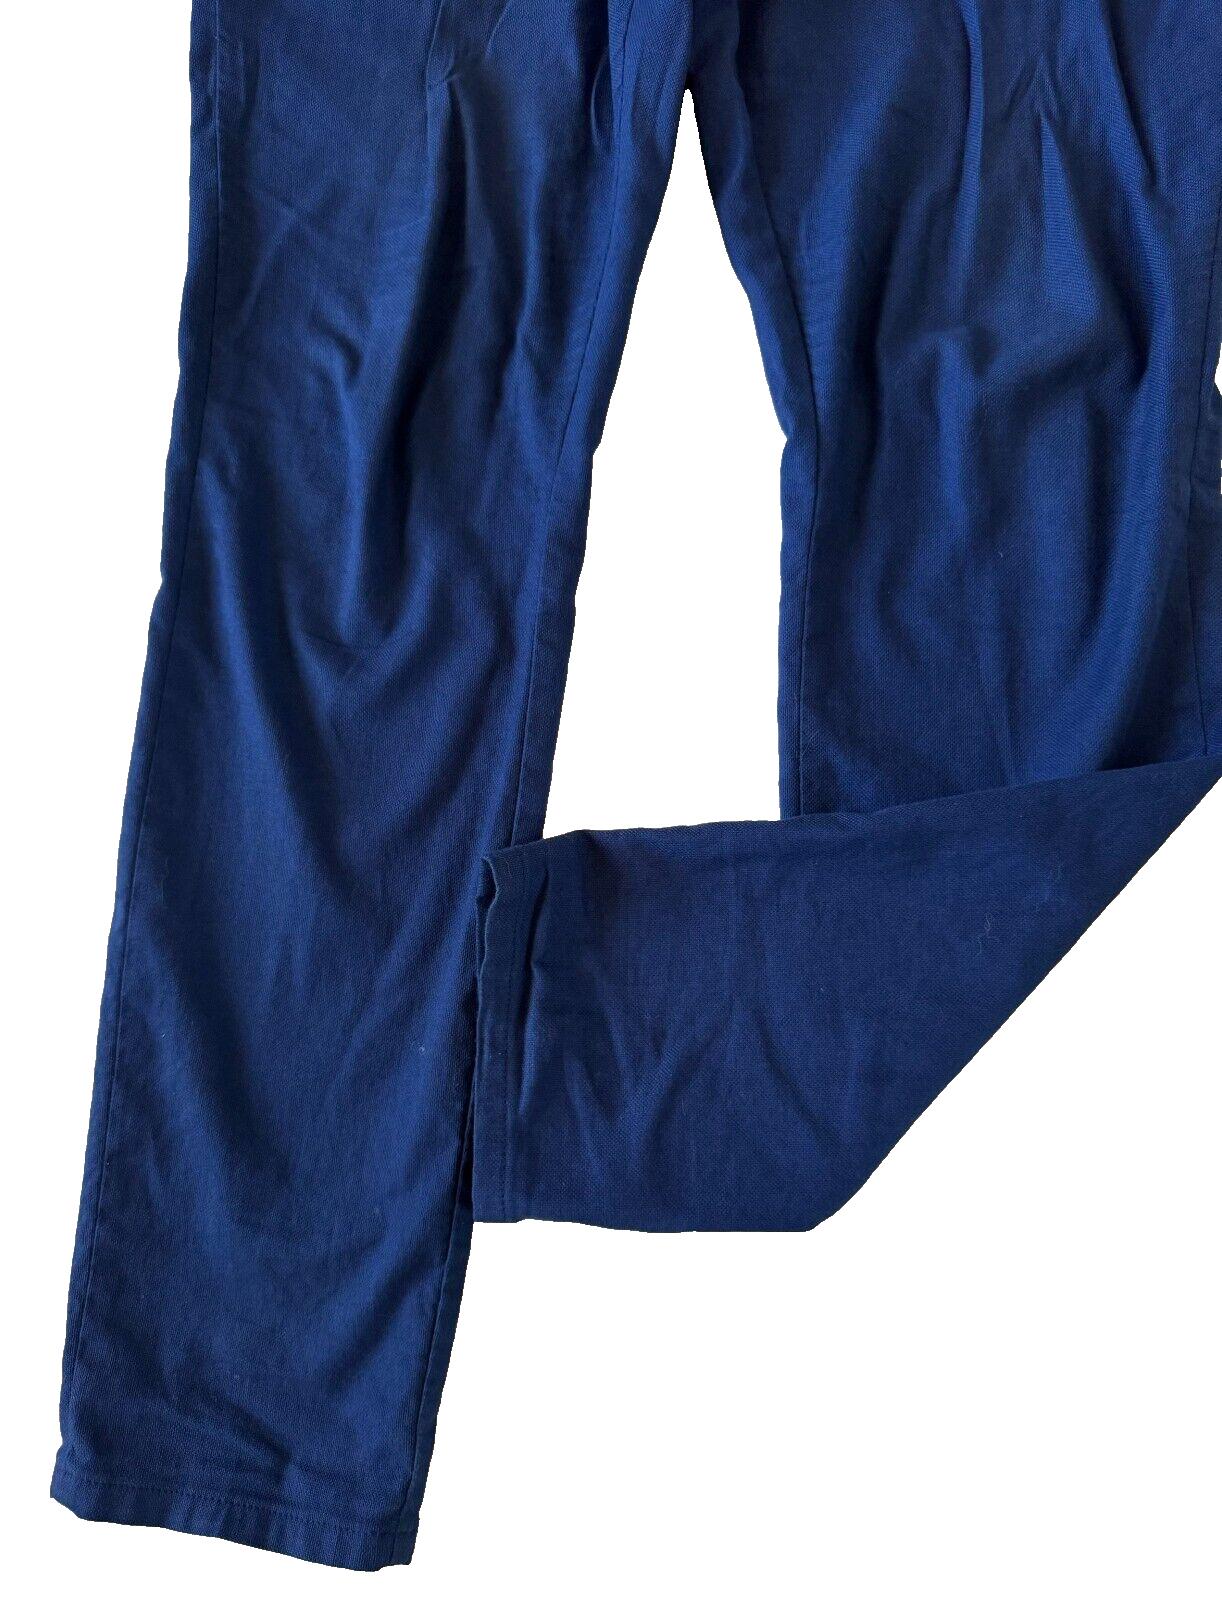 Boss Hugo Boss Men’s Blue Dress Pants Size 34 US